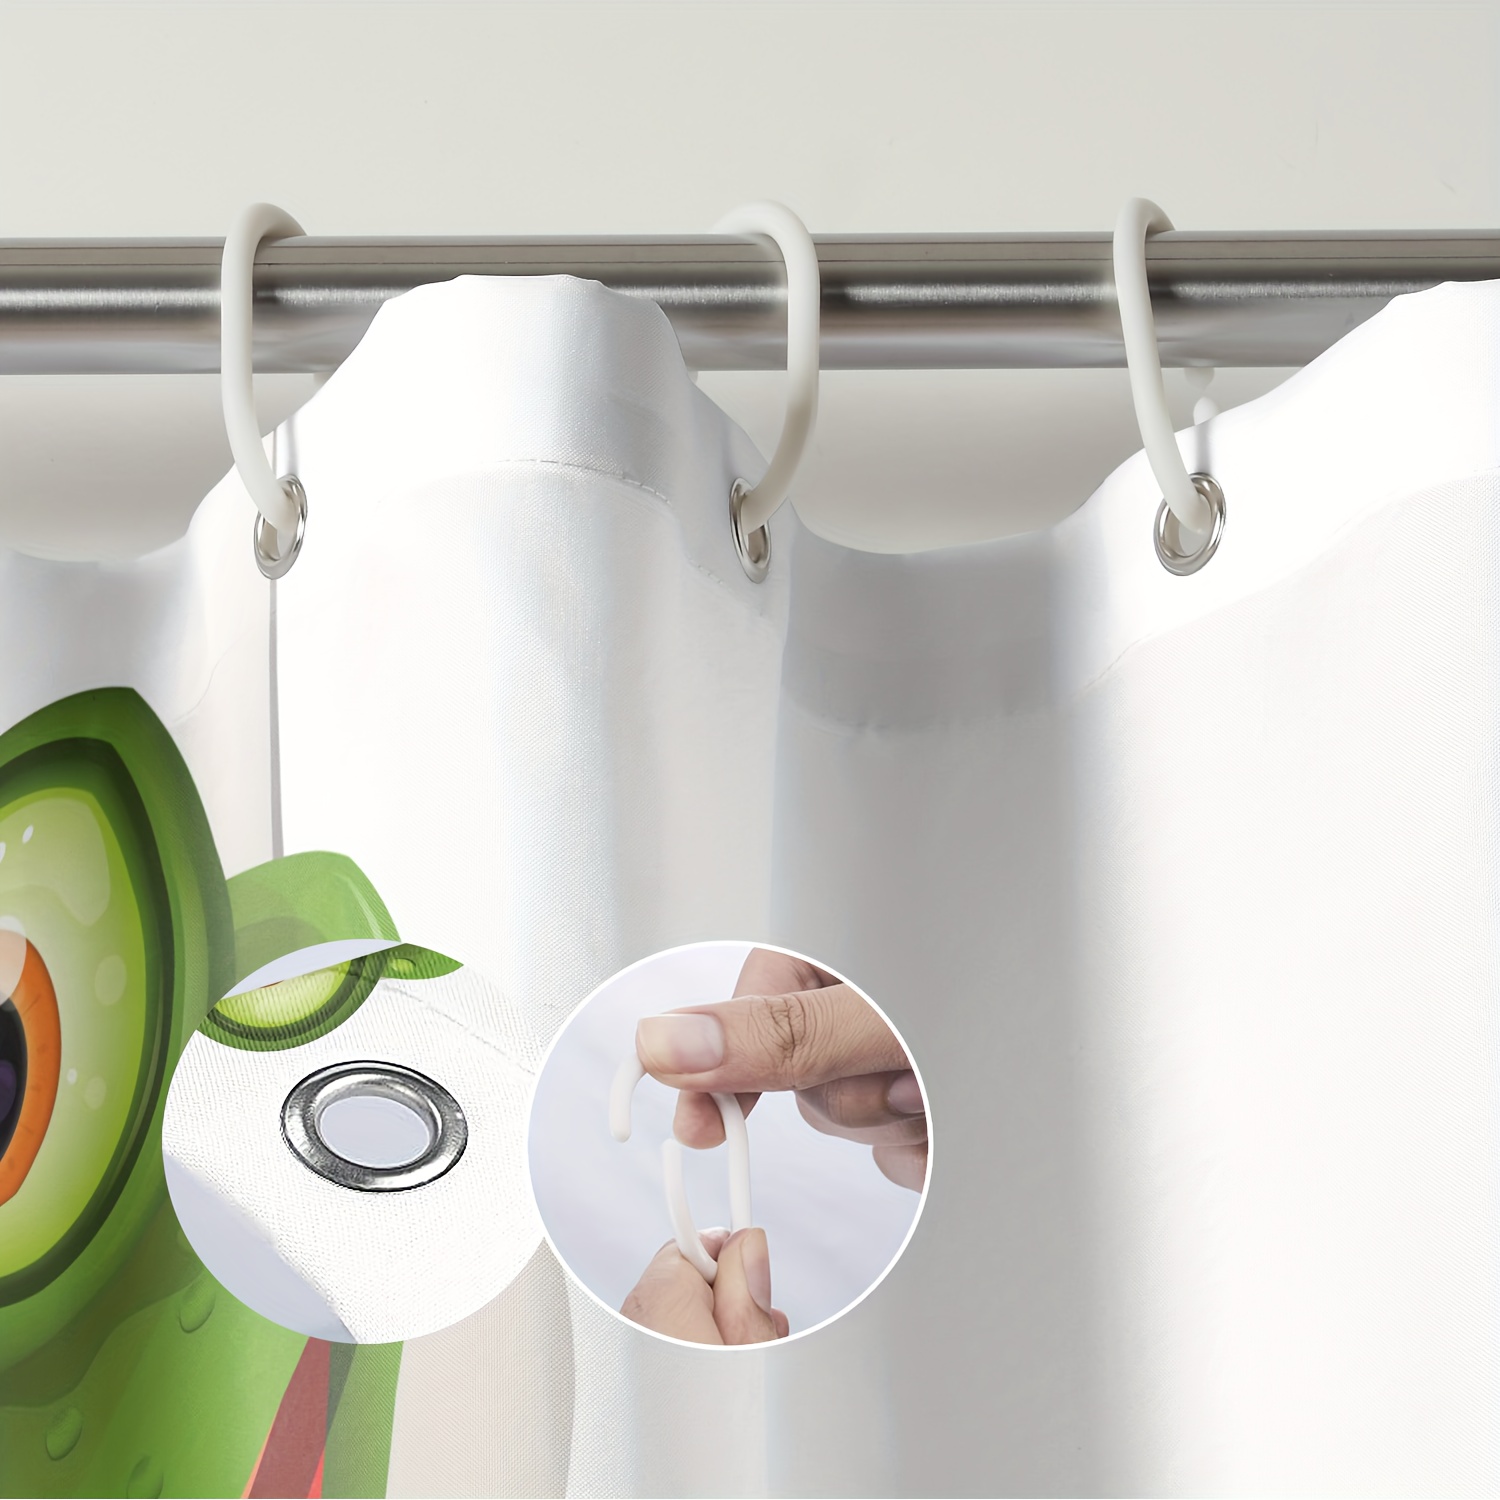 LB Funny Frog Shower Curtains for Kids Bathroom, Turkey